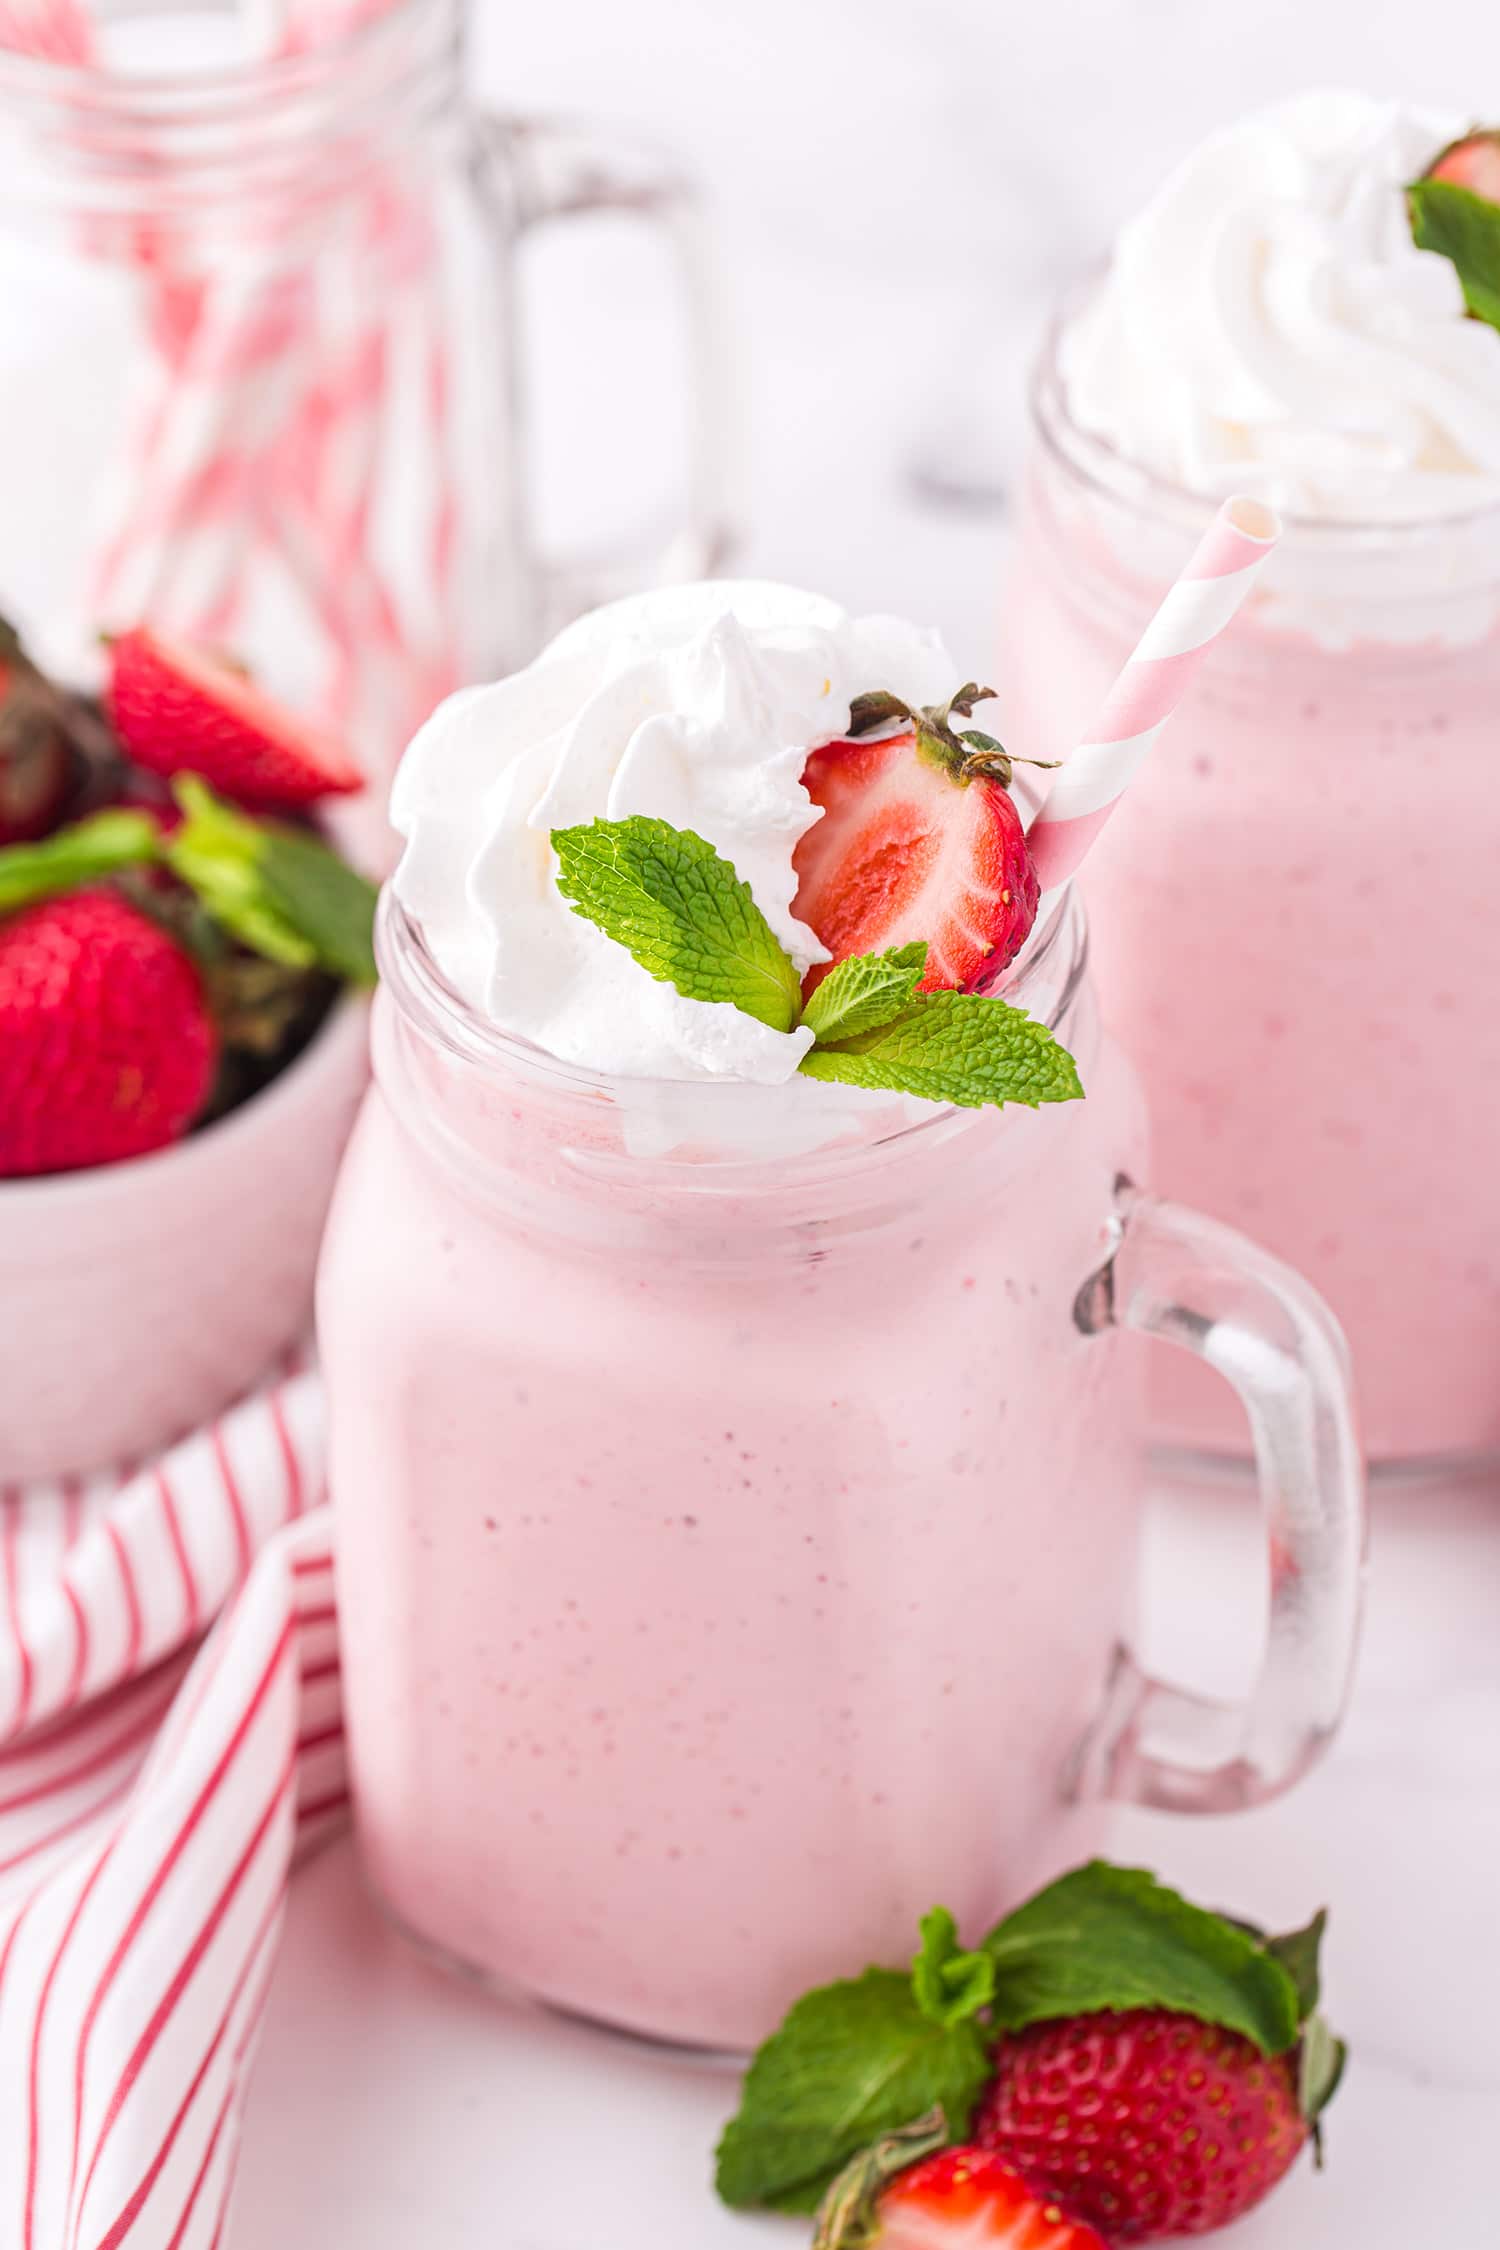 Strawberry milkshake in glass mug with whipped cream, strawberry, and mint leaf garnish